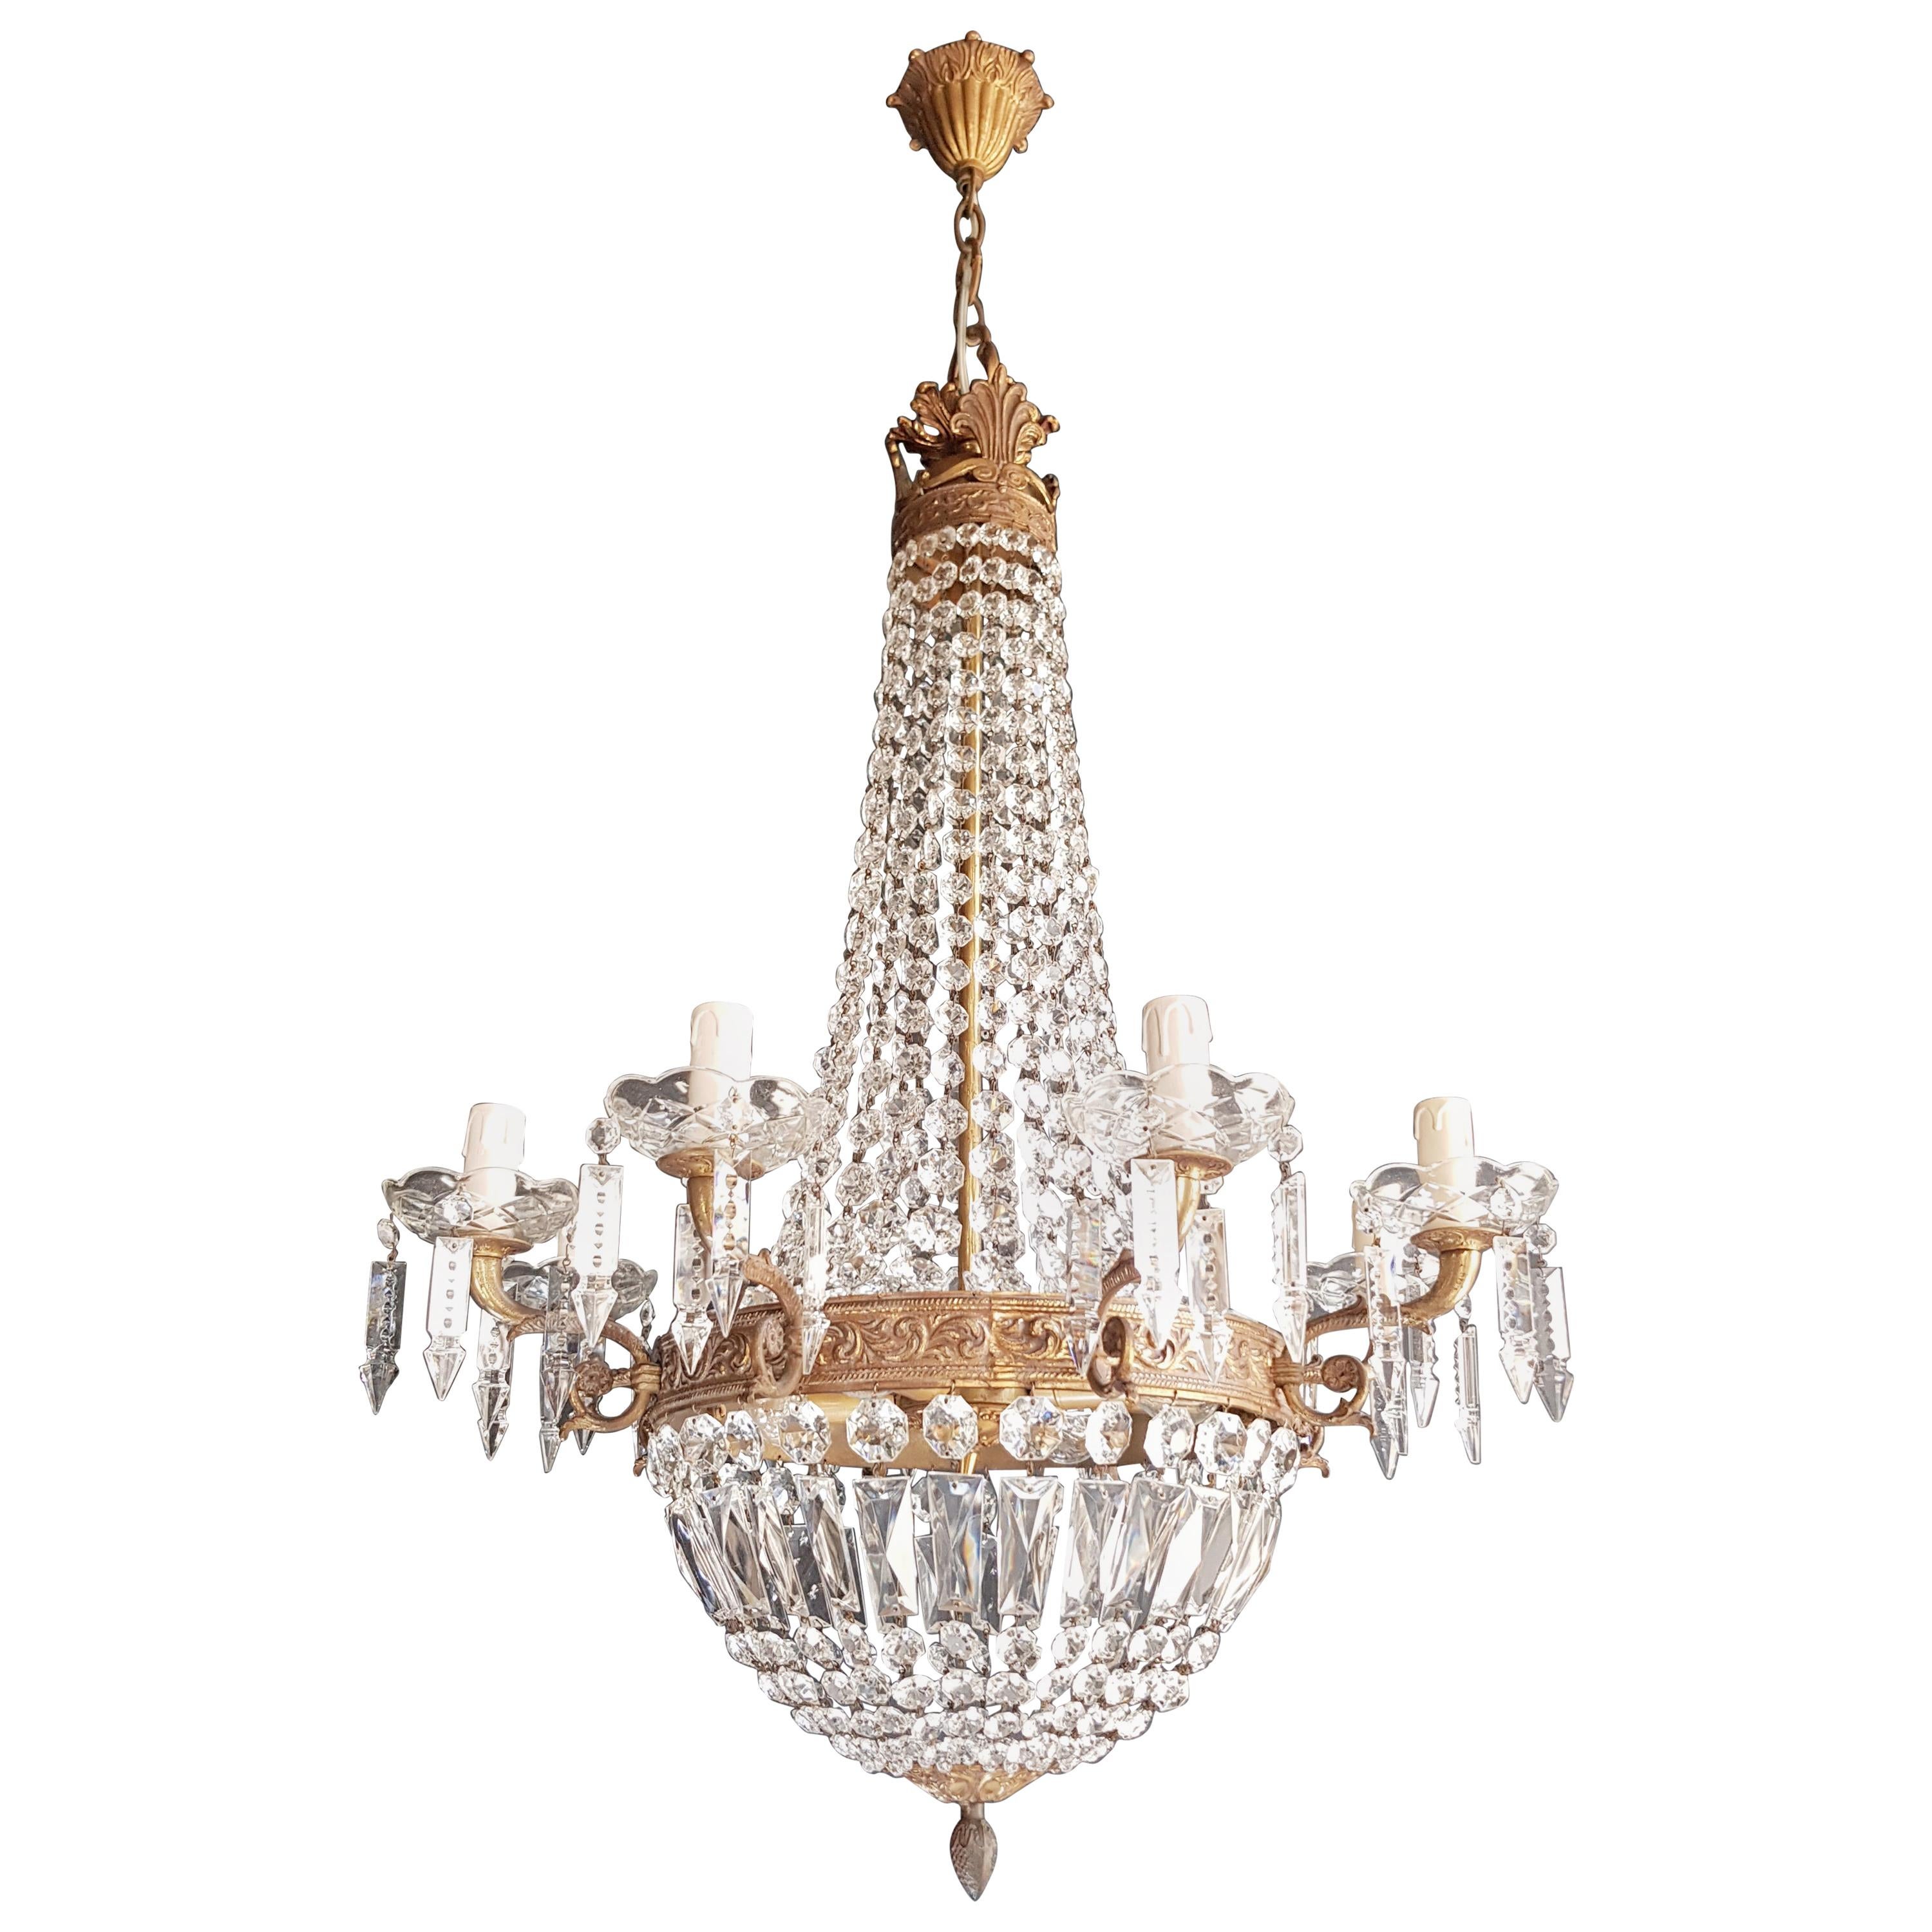 Montgolfiè Empire Sac a Pearl Chandelier Crystal Lustre Ceiling Lamp Antique WoW